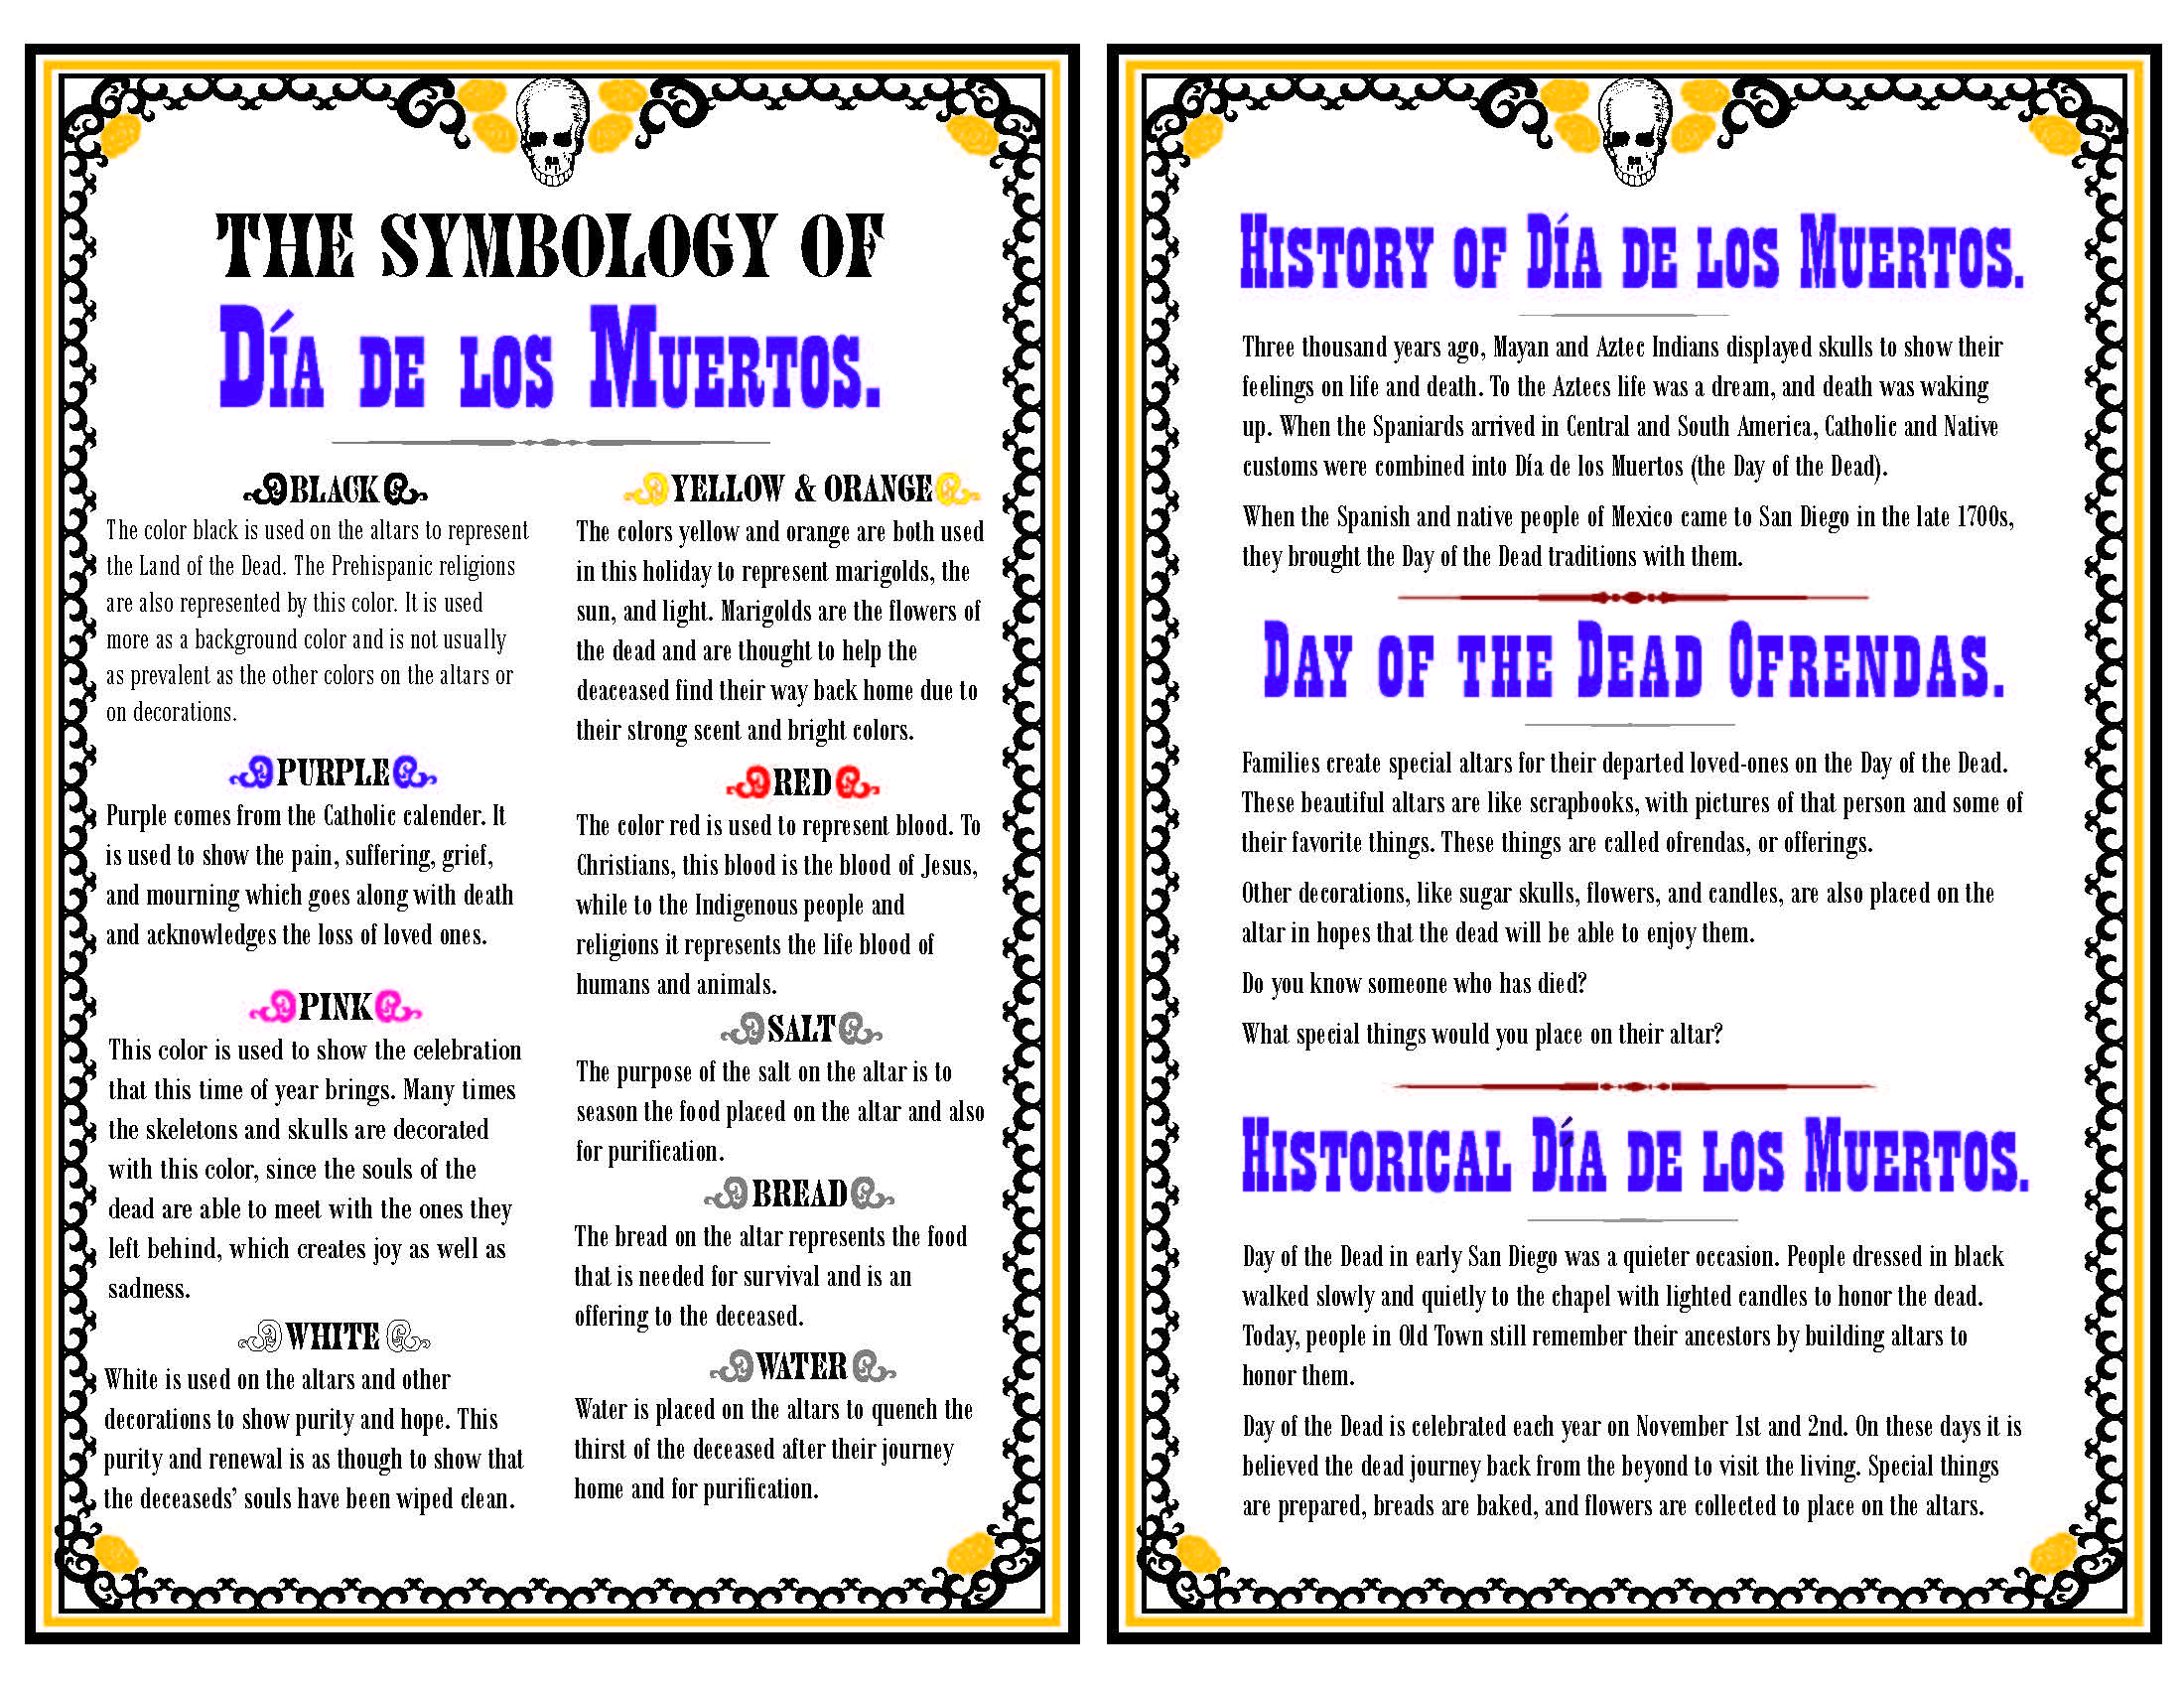 Information about the history and symbology of Día de los Muertos